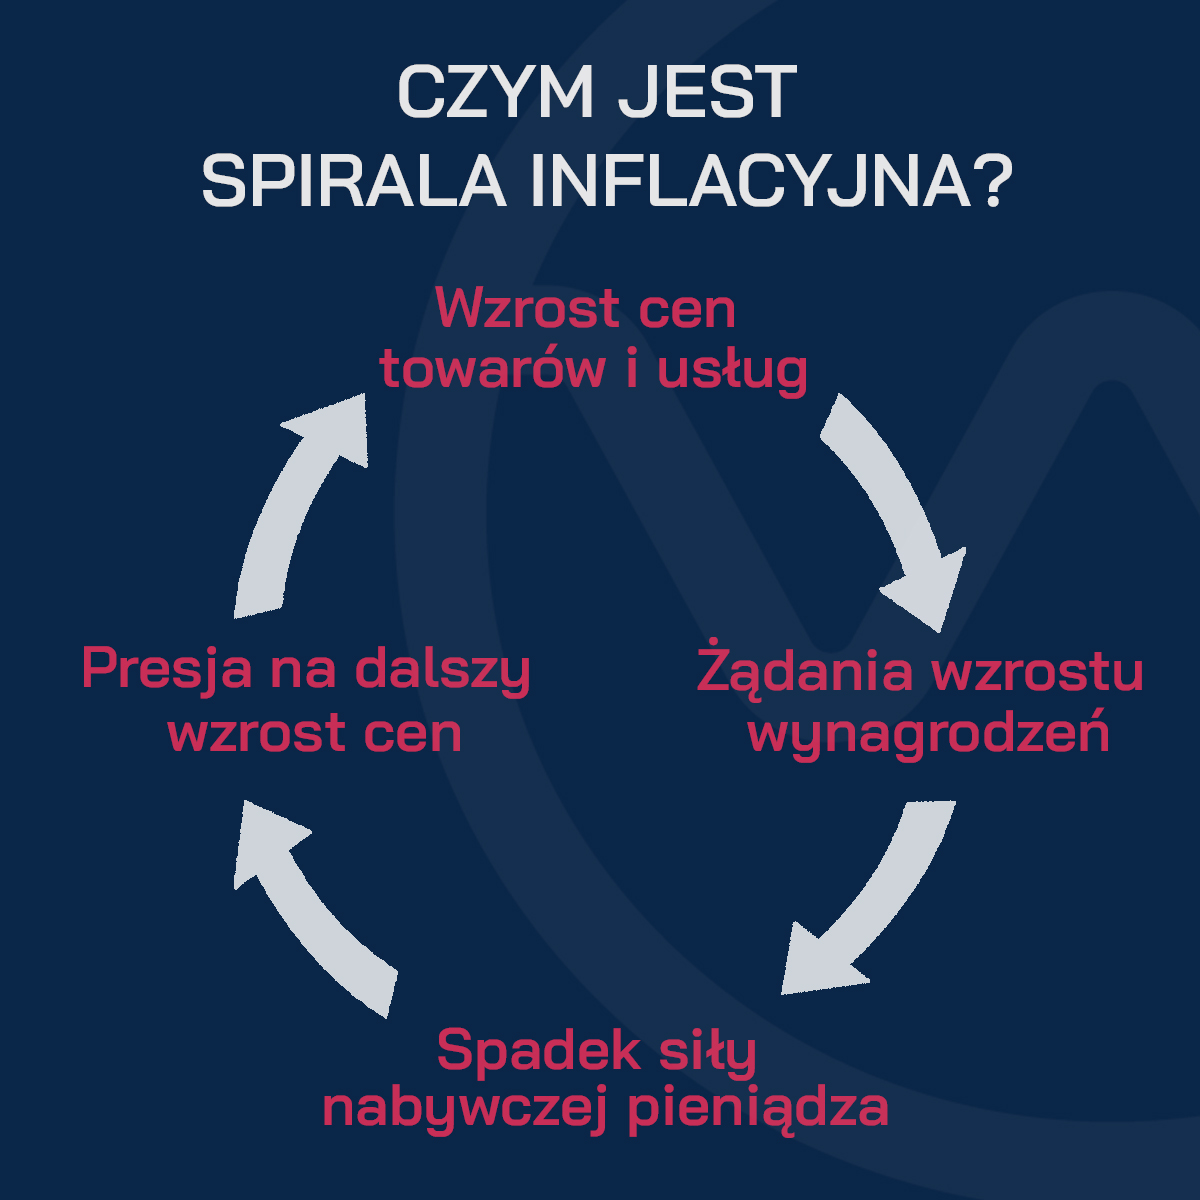 Spirala inflacyjna